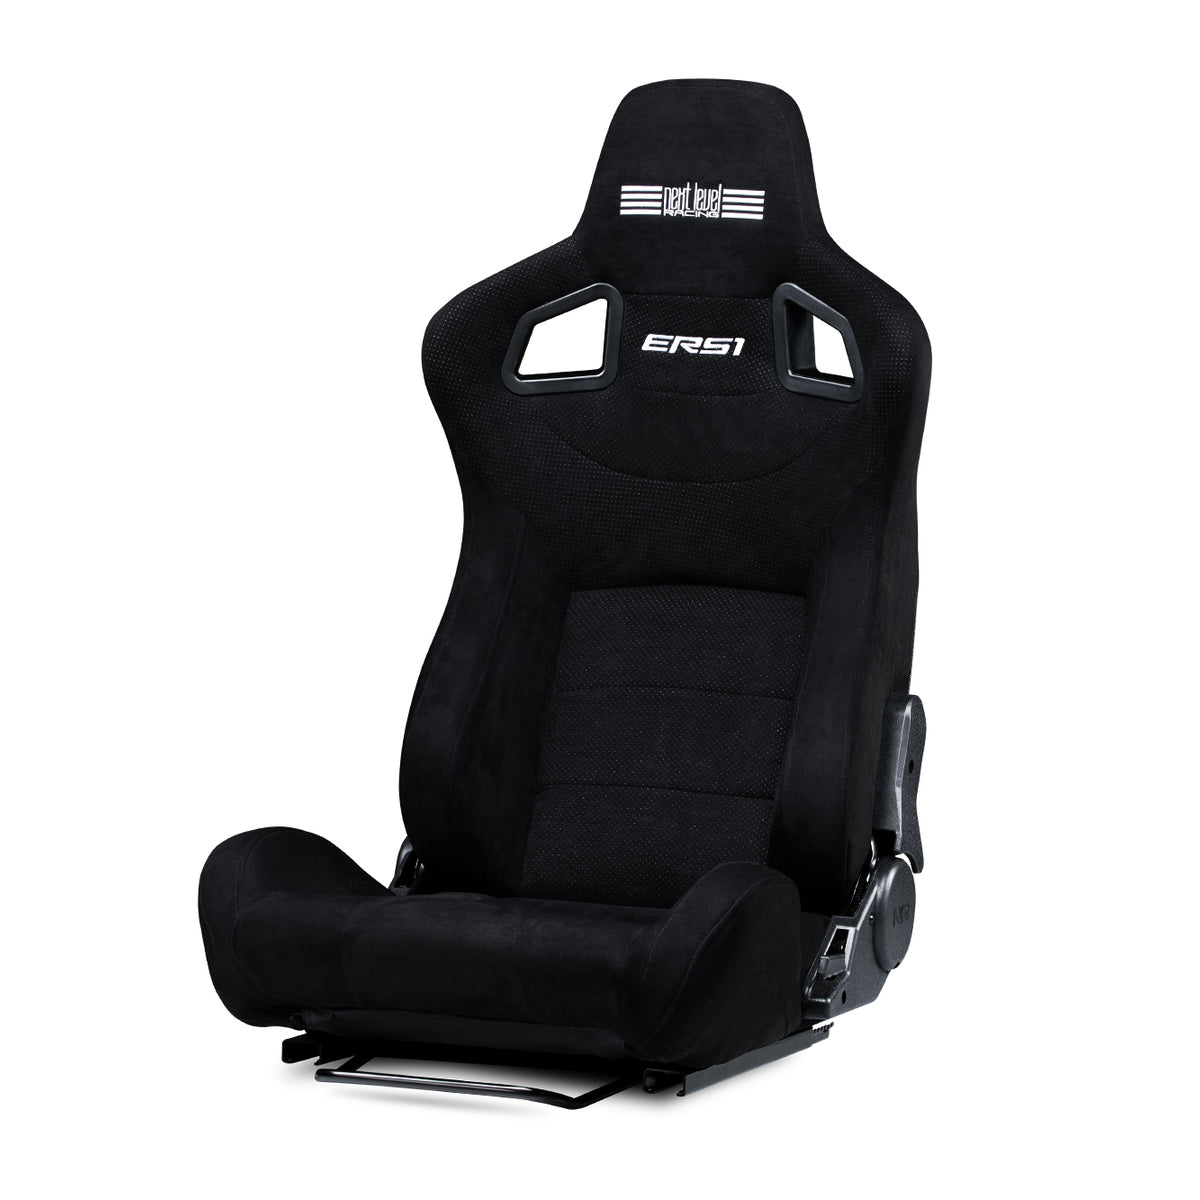 Next Level Racing Elite ES1 Sim Racing Seat (with Original Box)